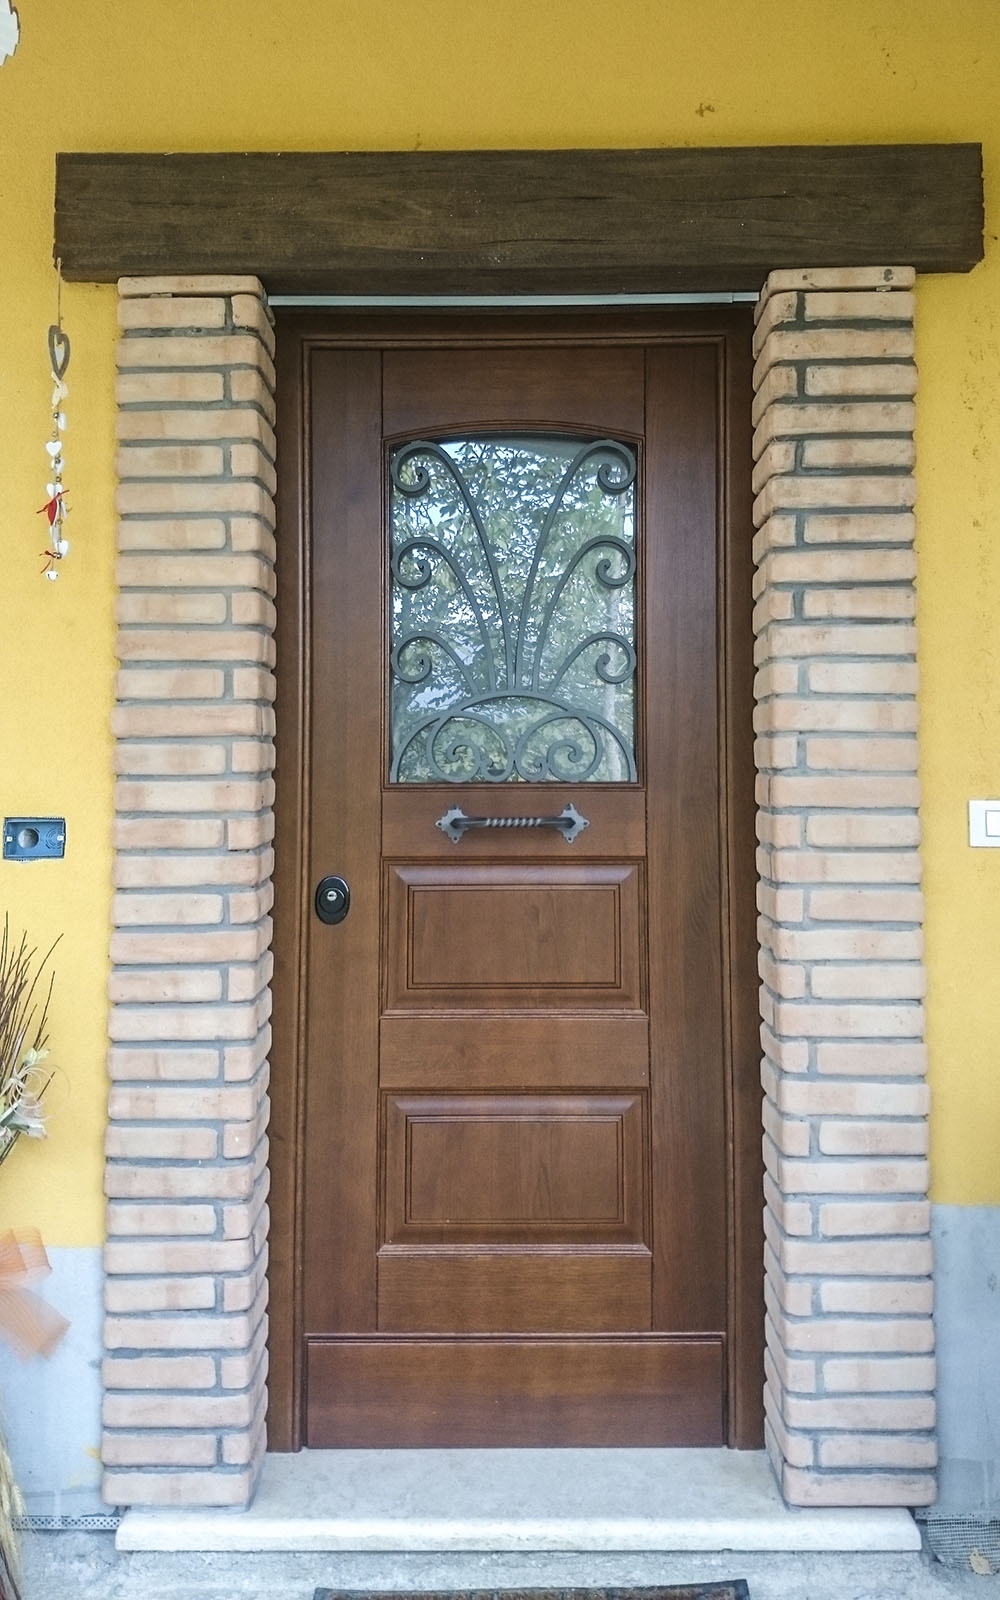 Risultati immagini per paraspifferi sottoporta blindata  Home door design,  Modern exterior doors, Entrance door design